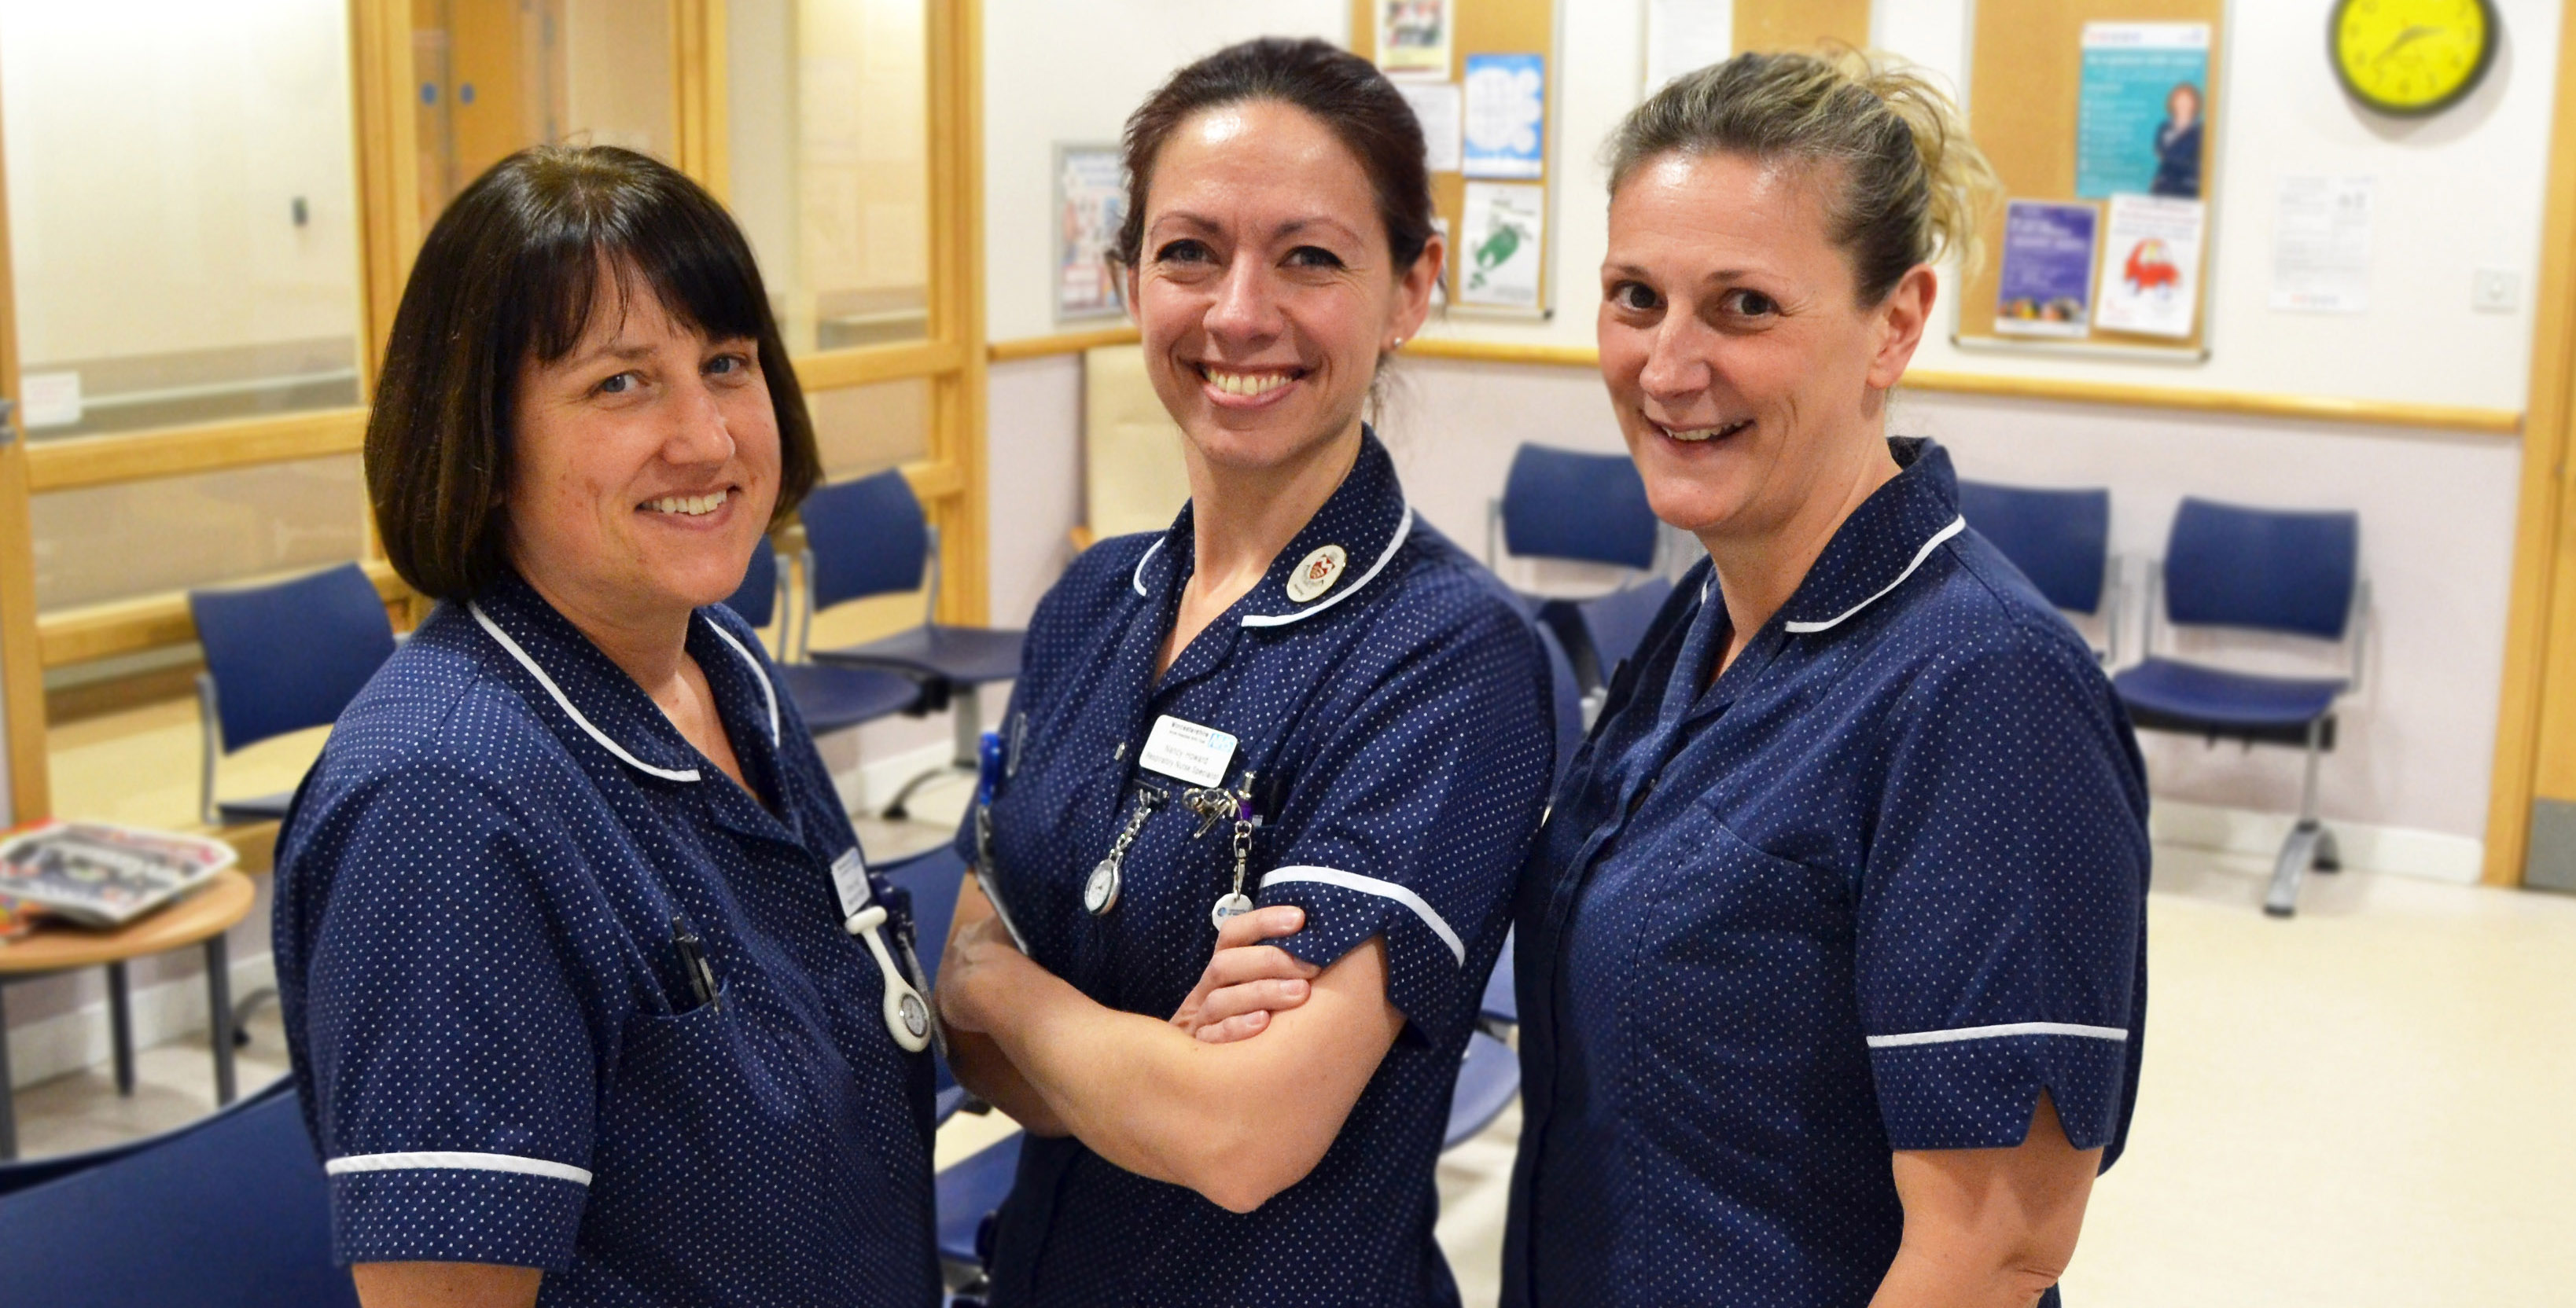 Three nurses standing together